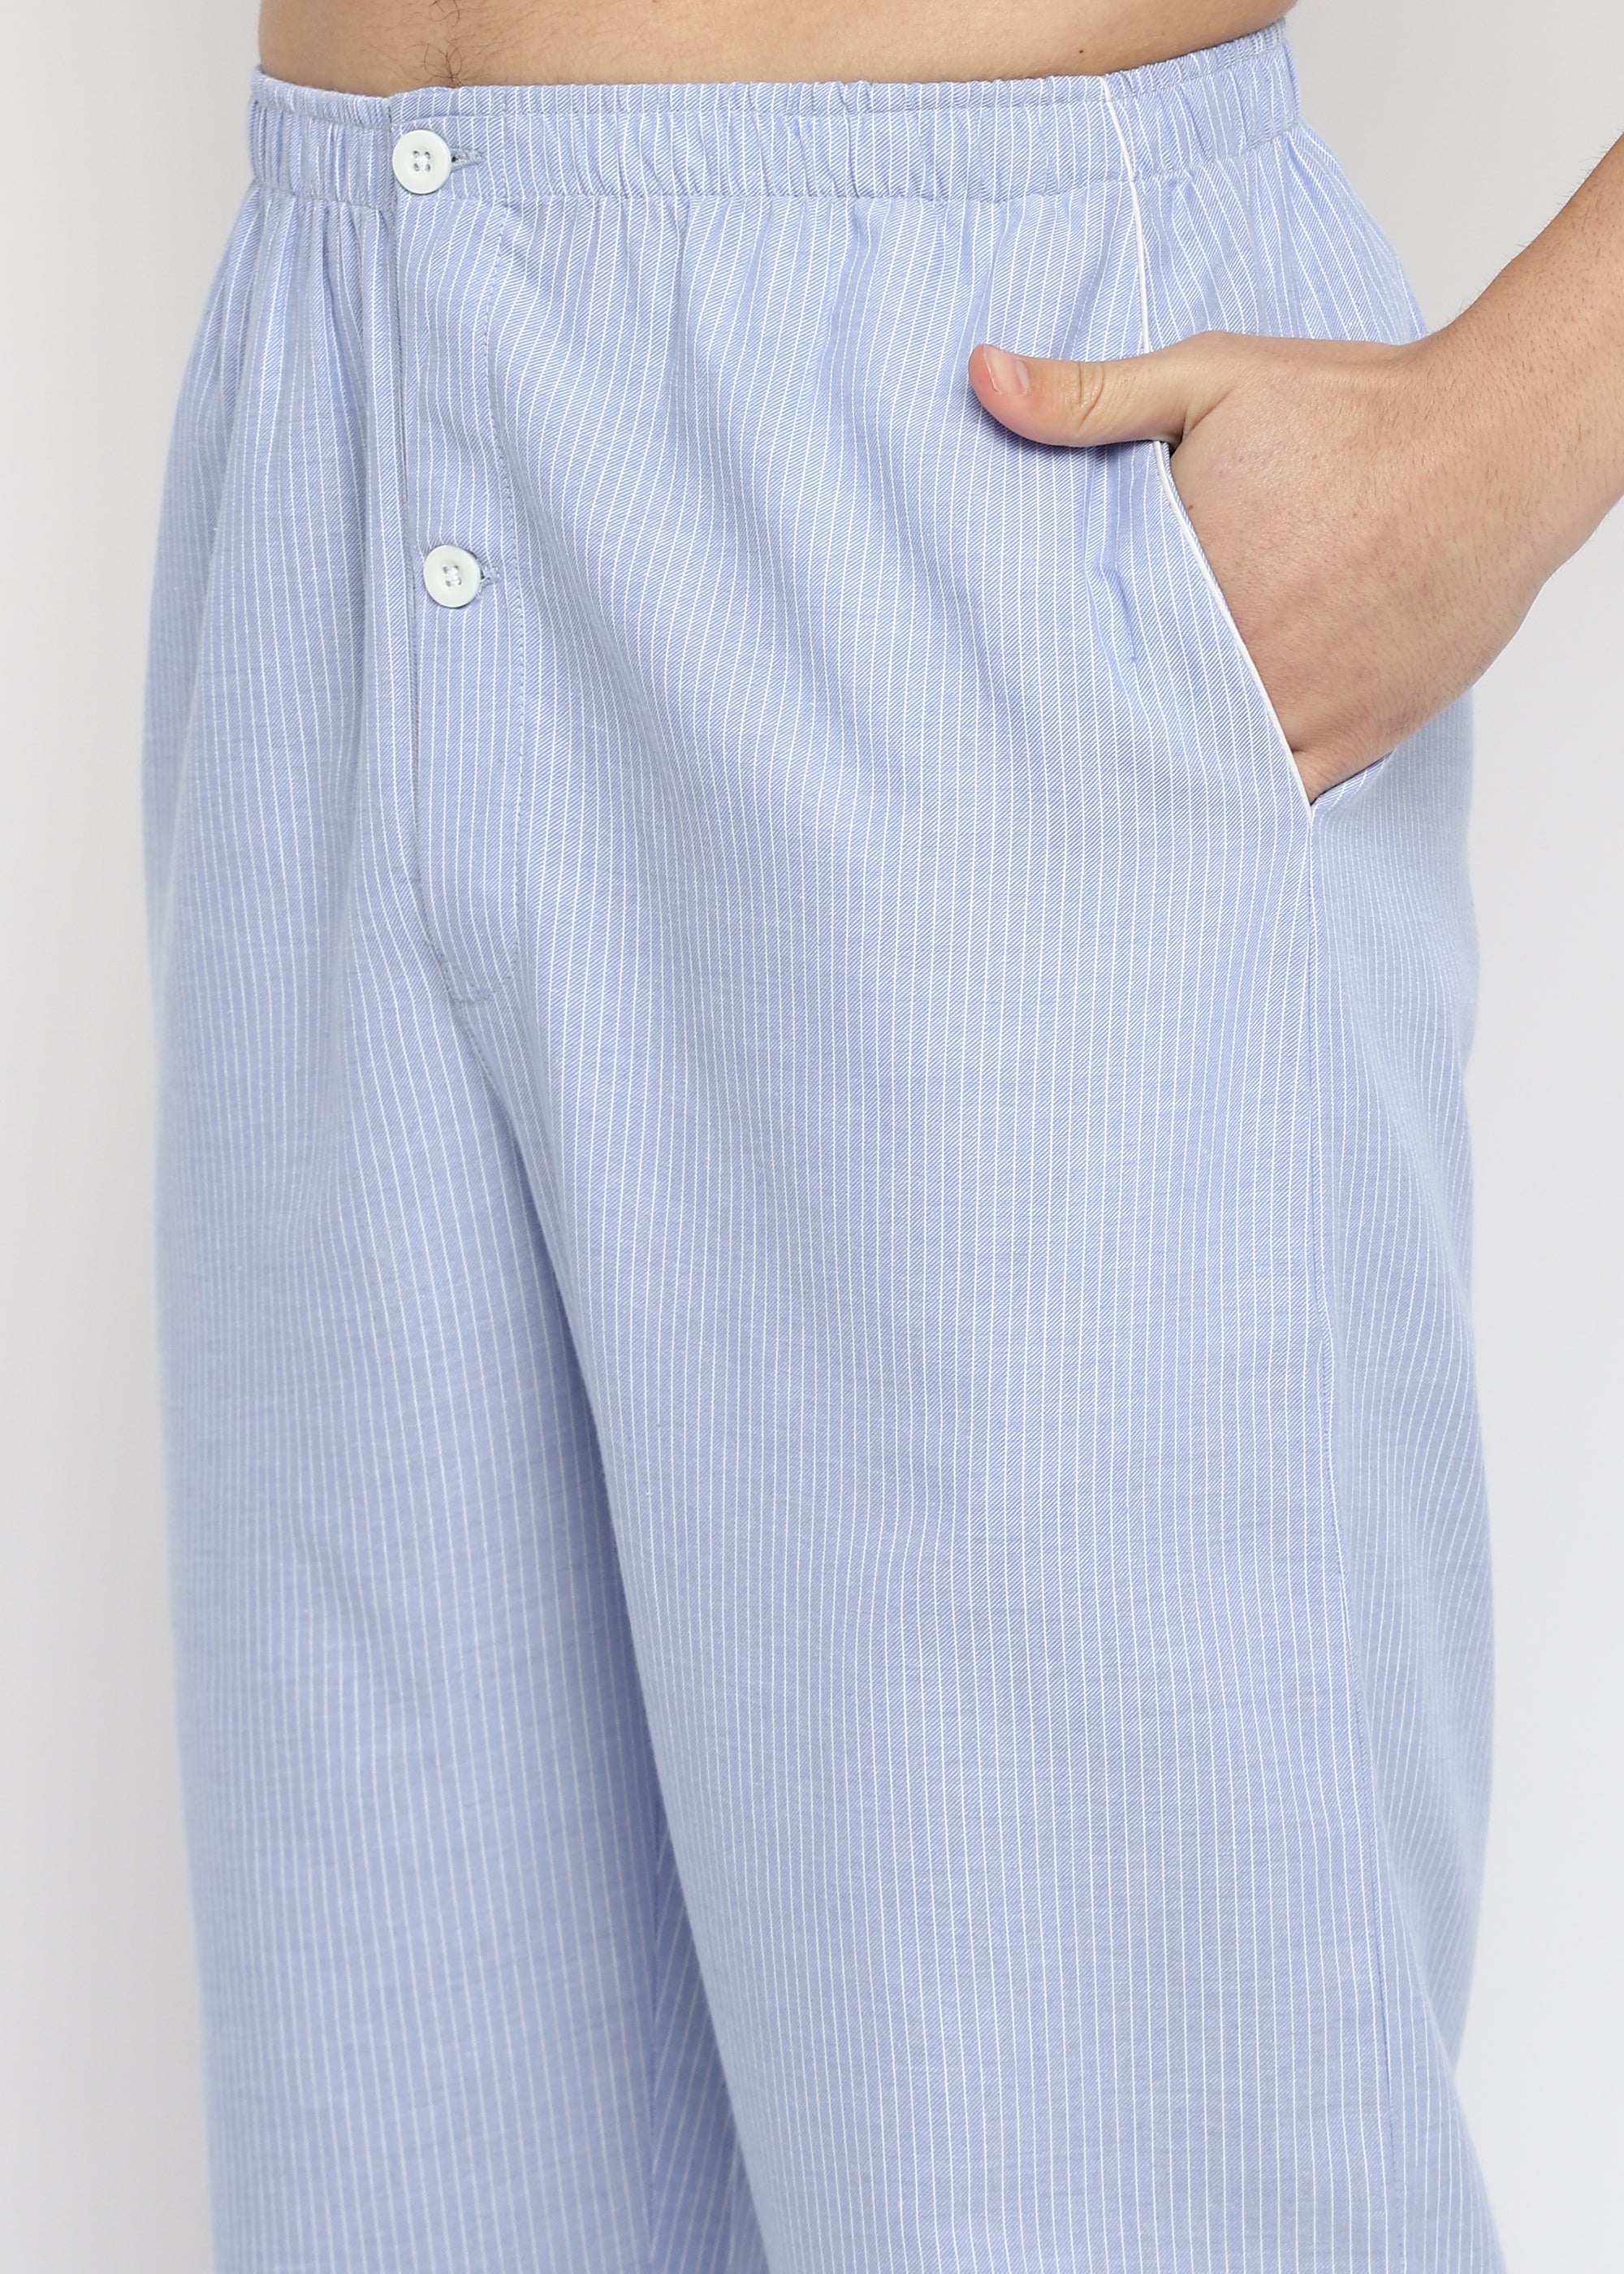 Tiny Stripes Print Cotton Long Sleeve Men's Night Suit - Shopbloom